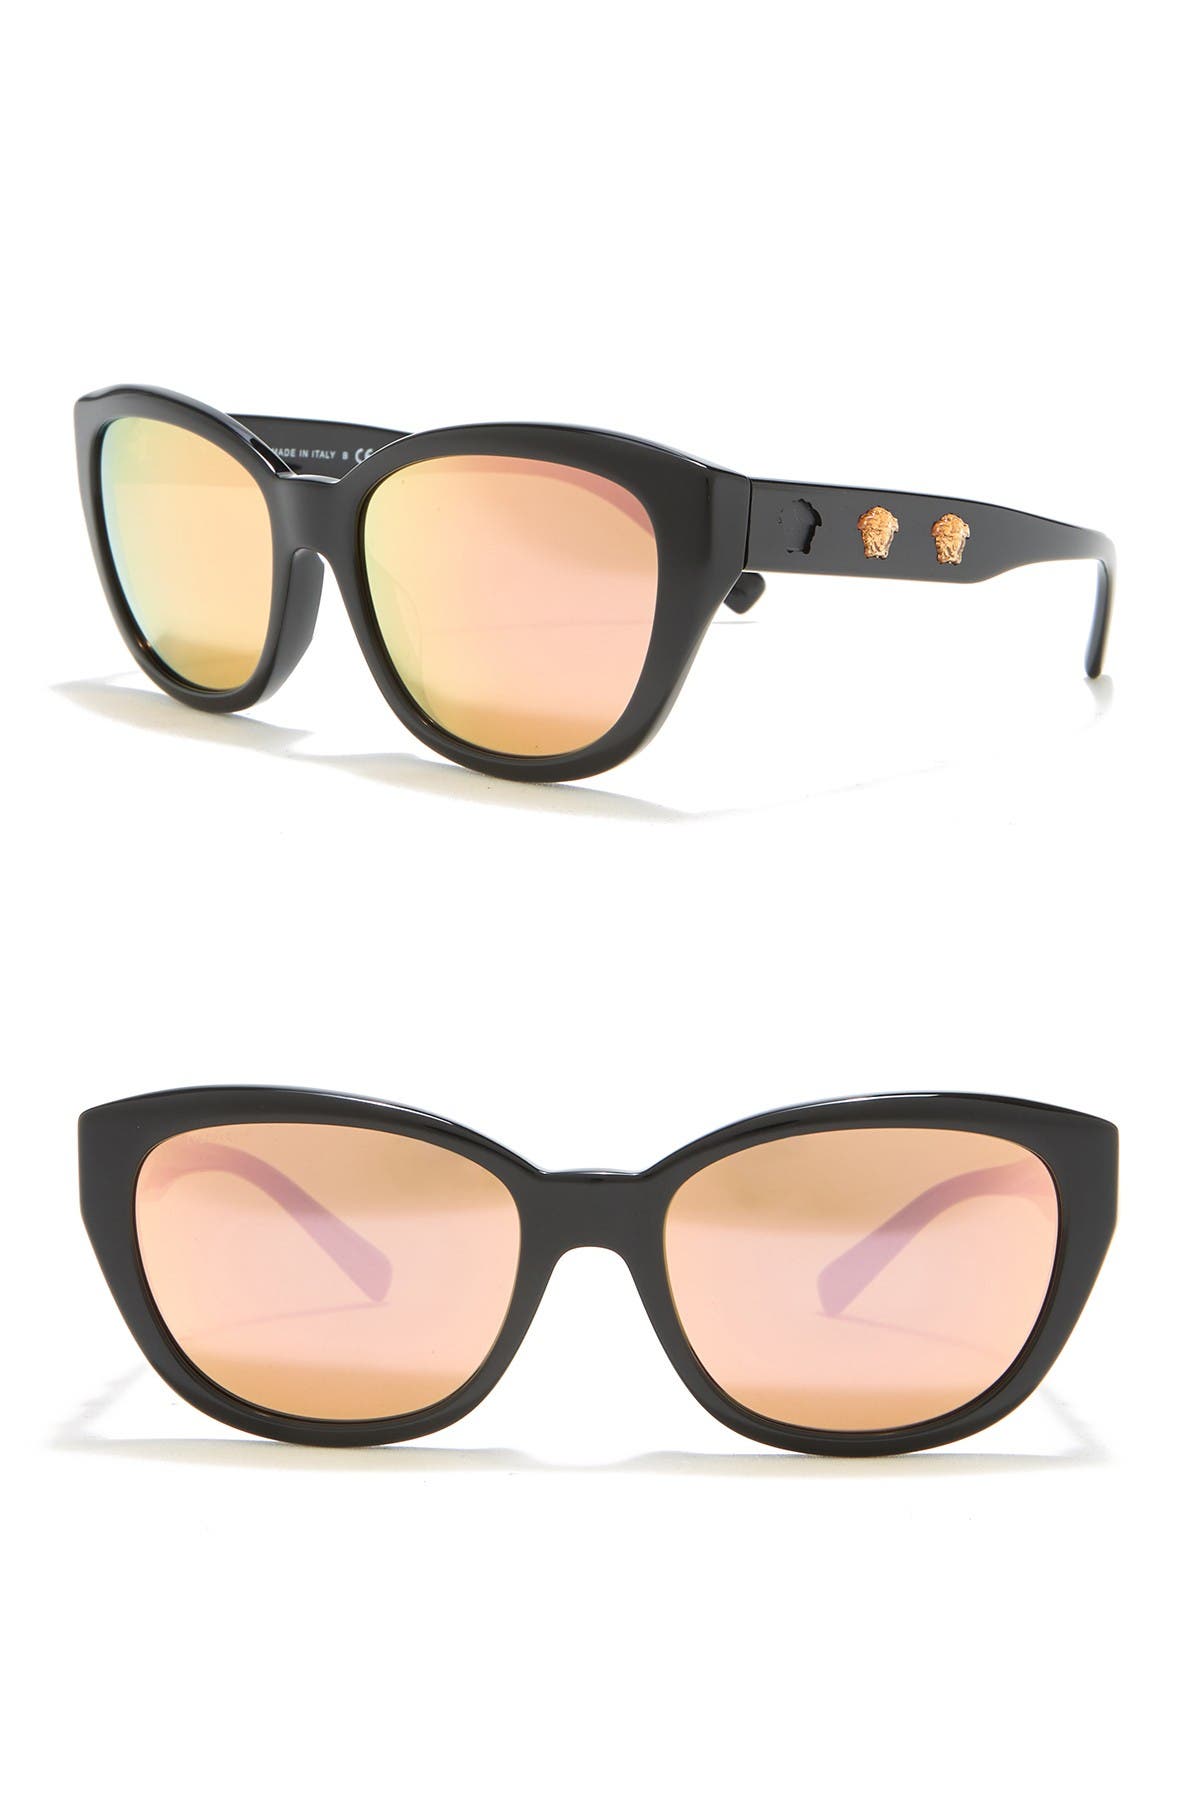 nordstrom rack versace sunglasses